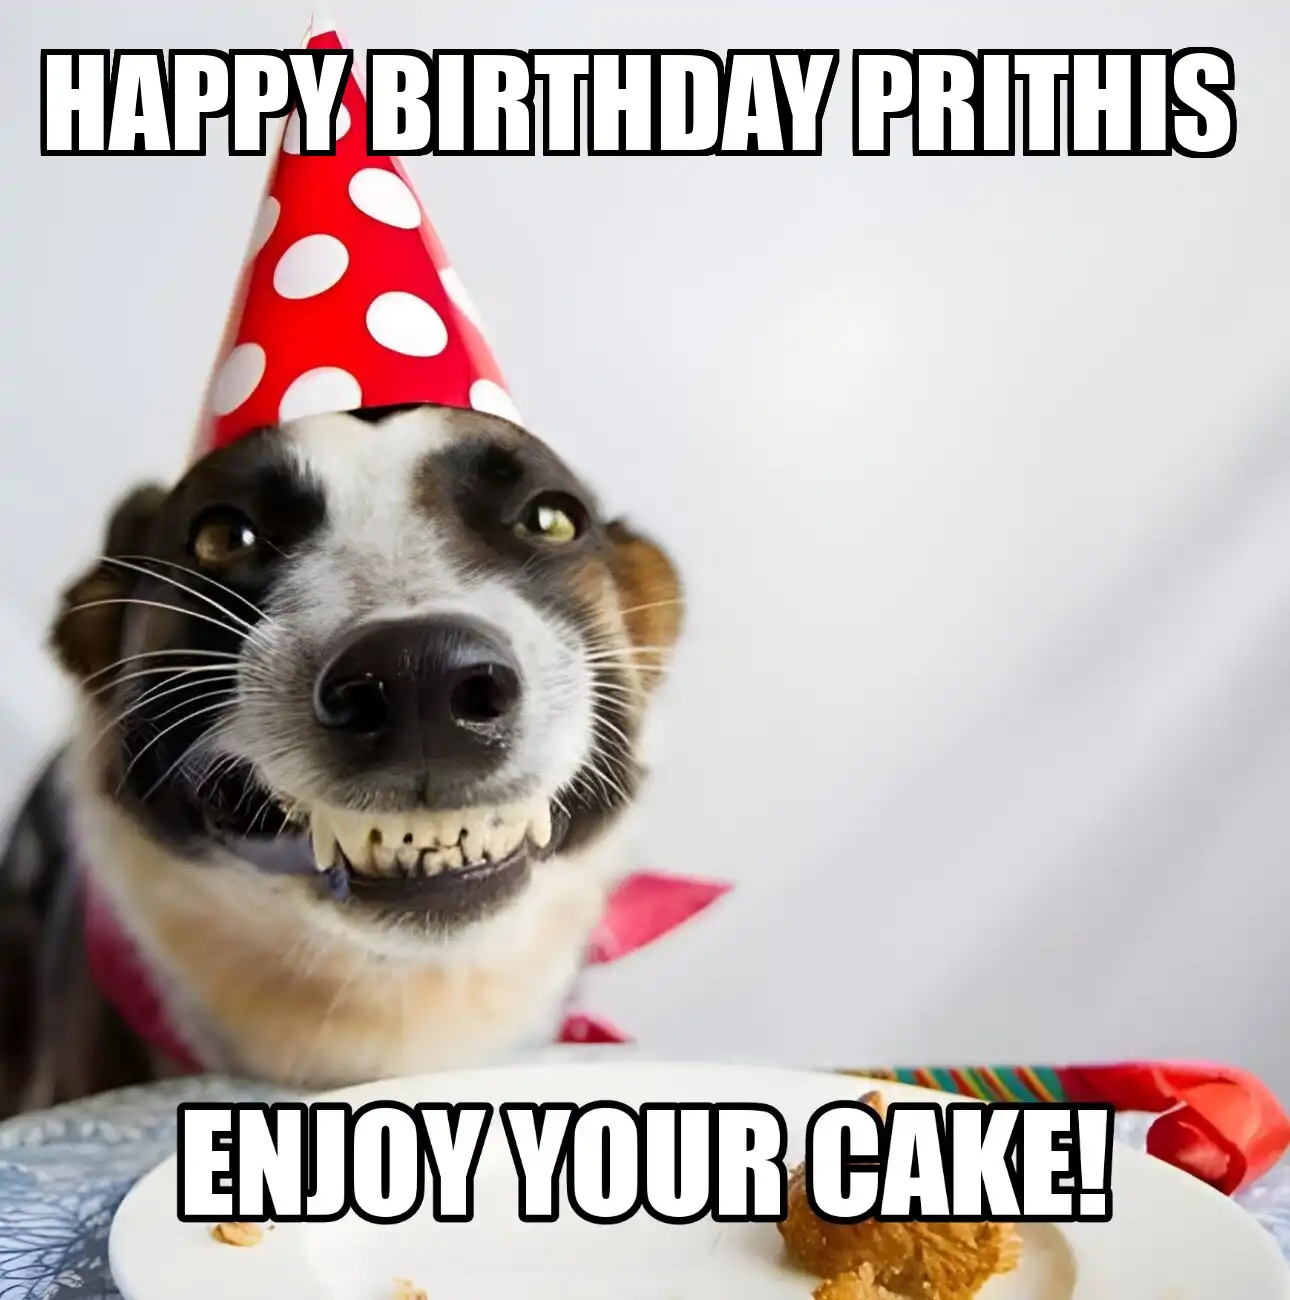 Happy Birthday Prithis Enjoy Your Cake Dog Meme